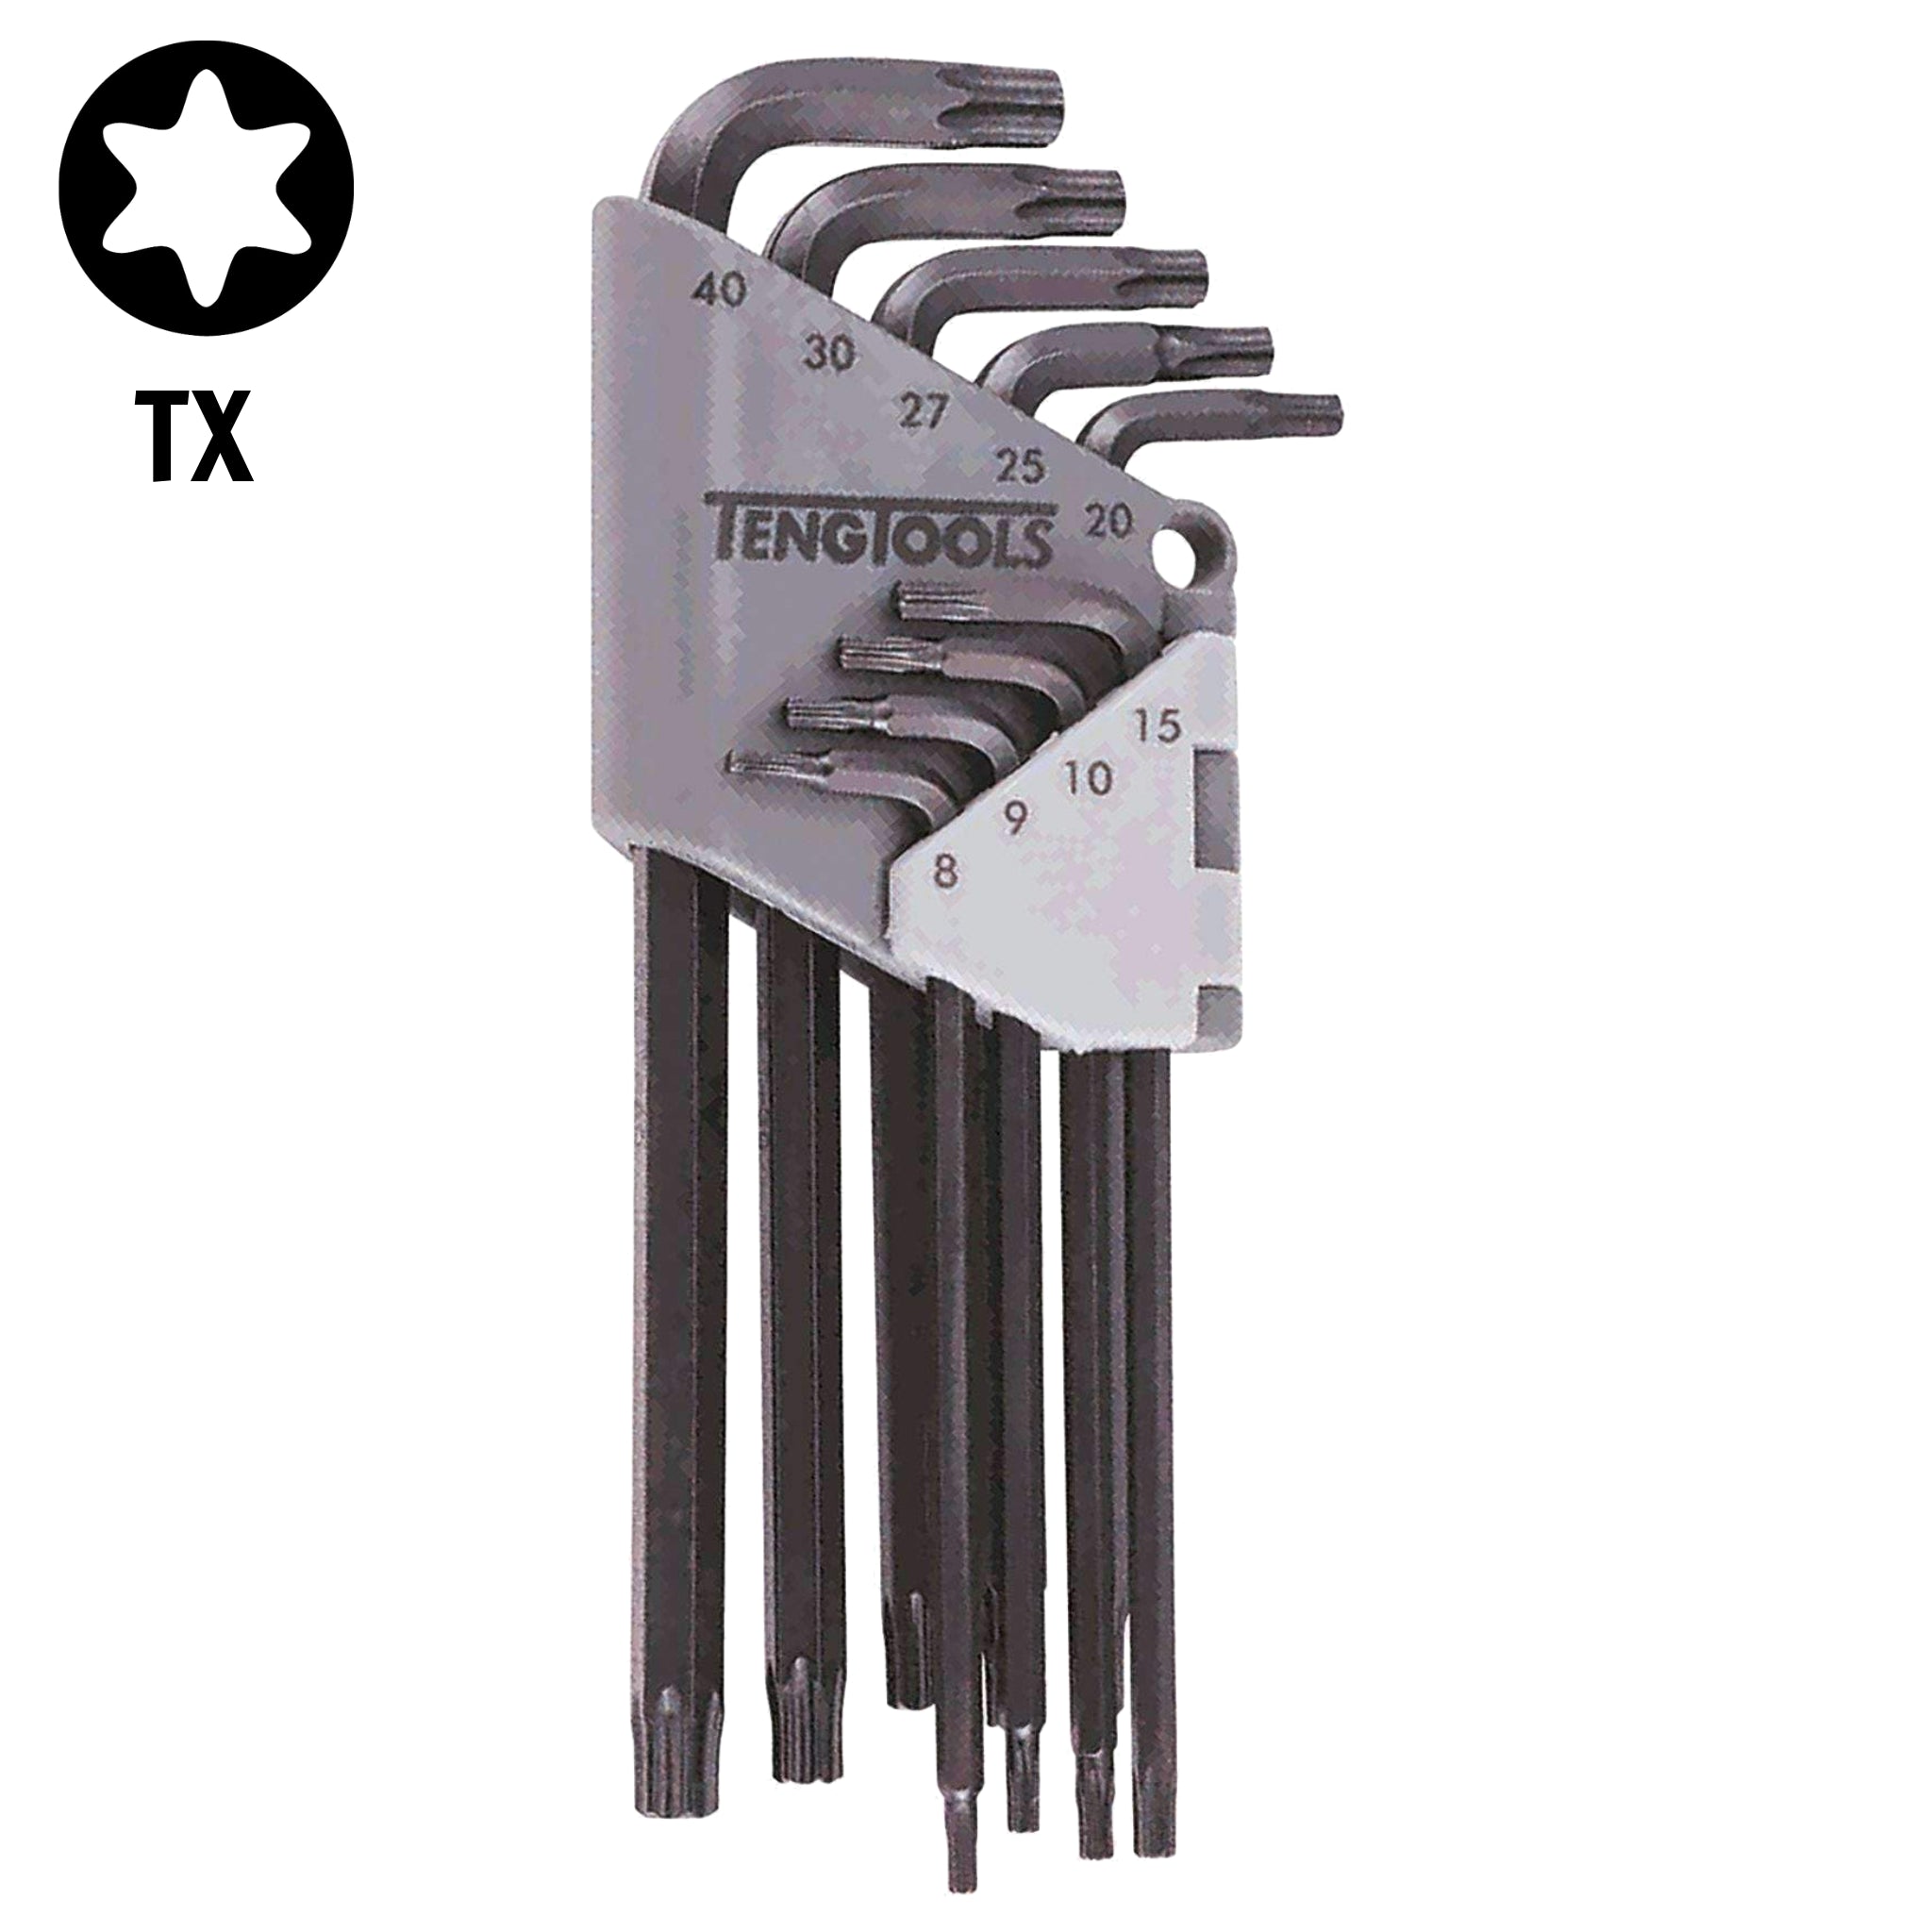 Teng Tools 9 Piece Black Industrial Grade Torx Key / Allen Wrench Set (TX8 - TX40) - 1479TX